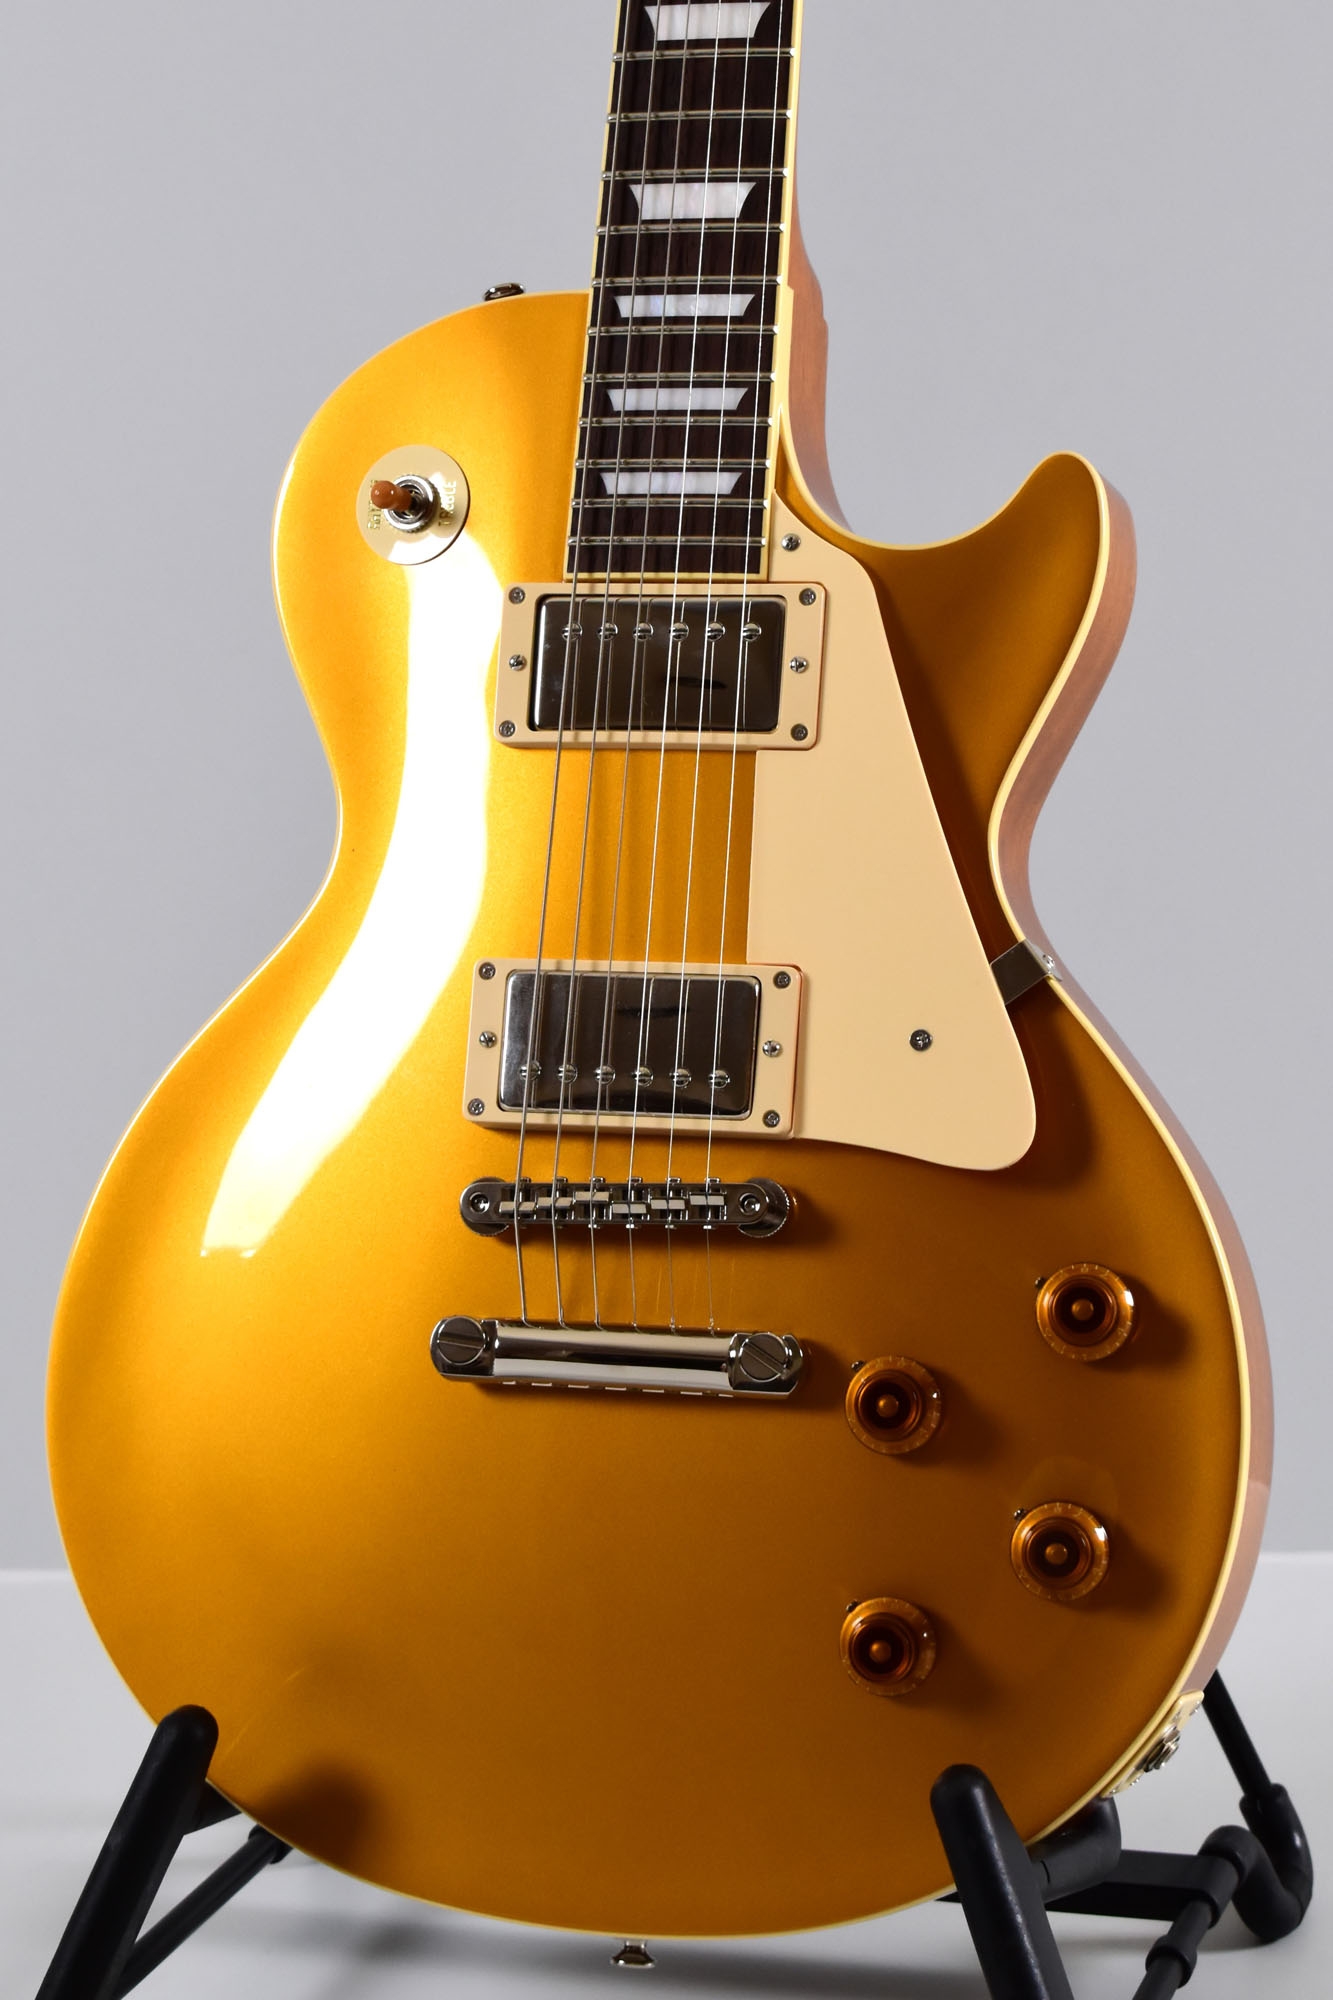 FOR SALE - New Tokai ULS129 Love Rock Electric Guitar - Goldtop